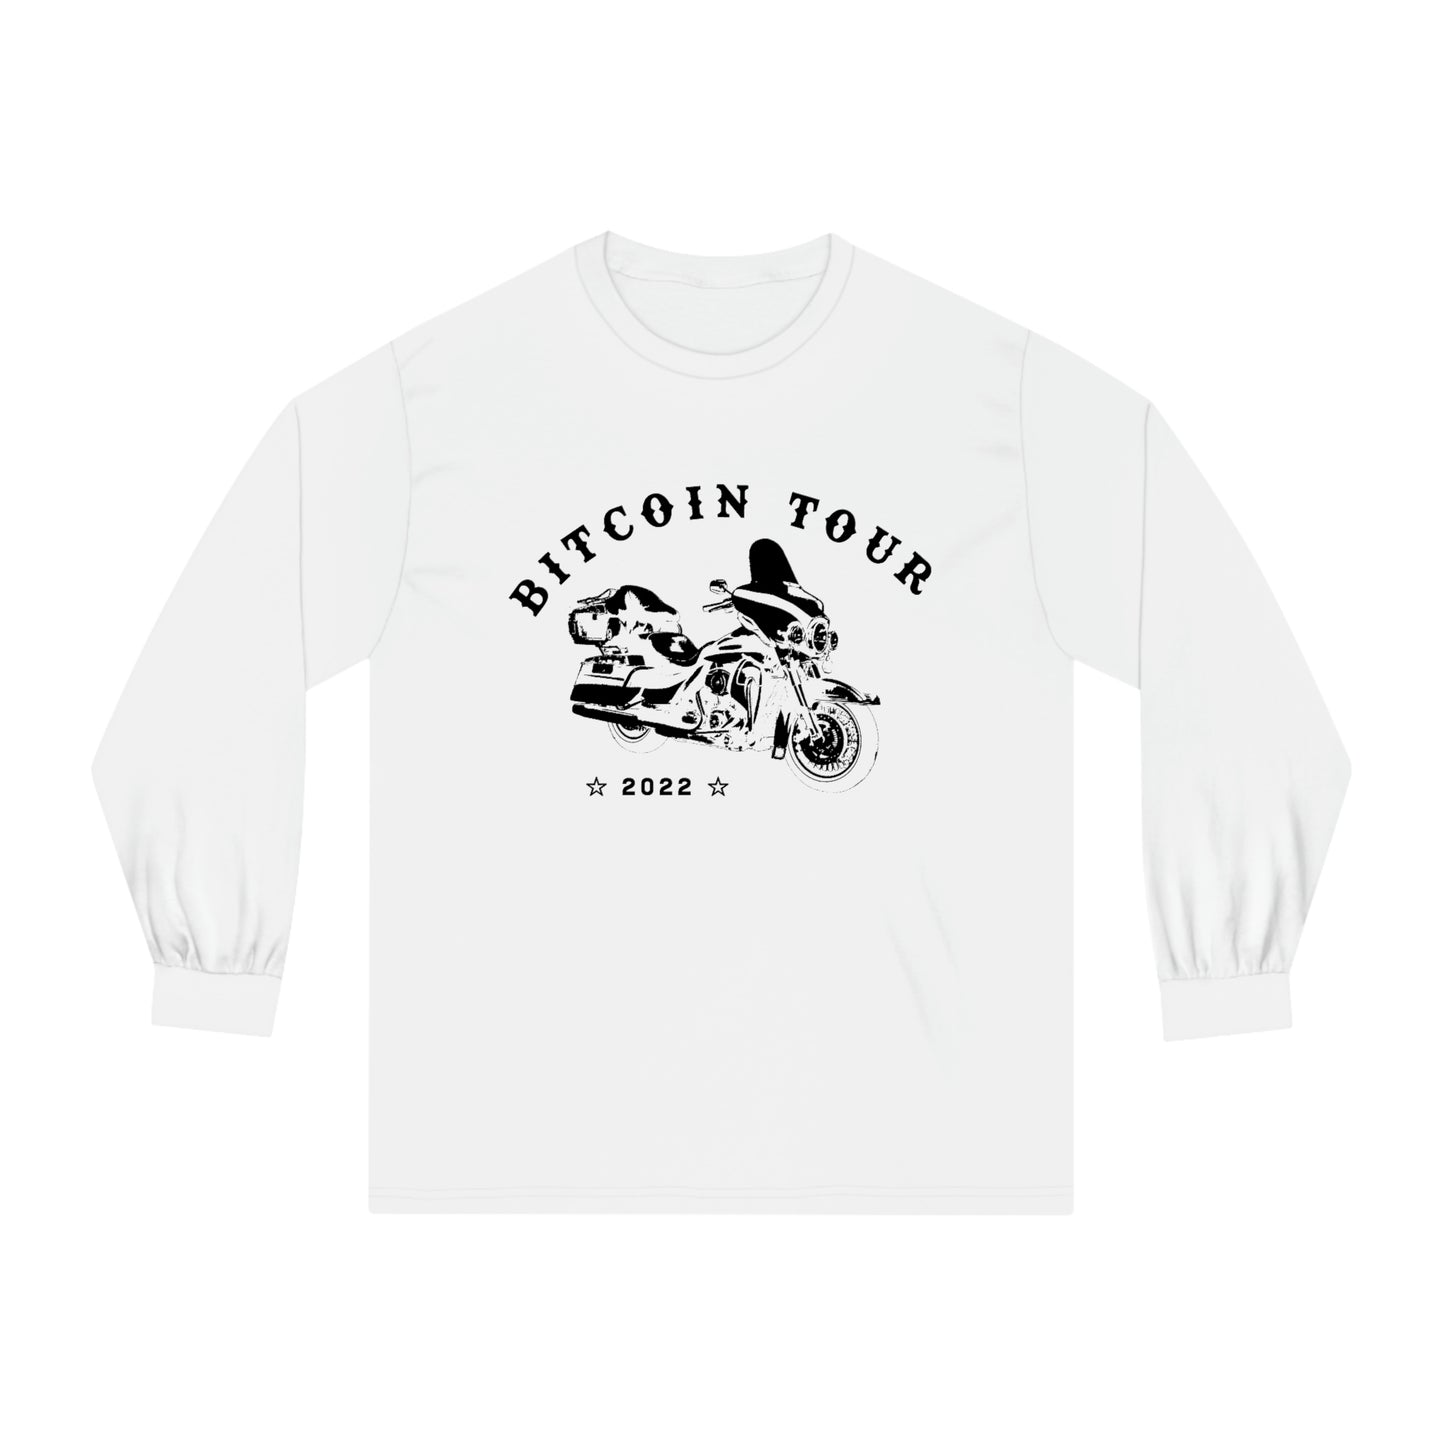 BTC Tour Classic Long Sleeve T-Shirt